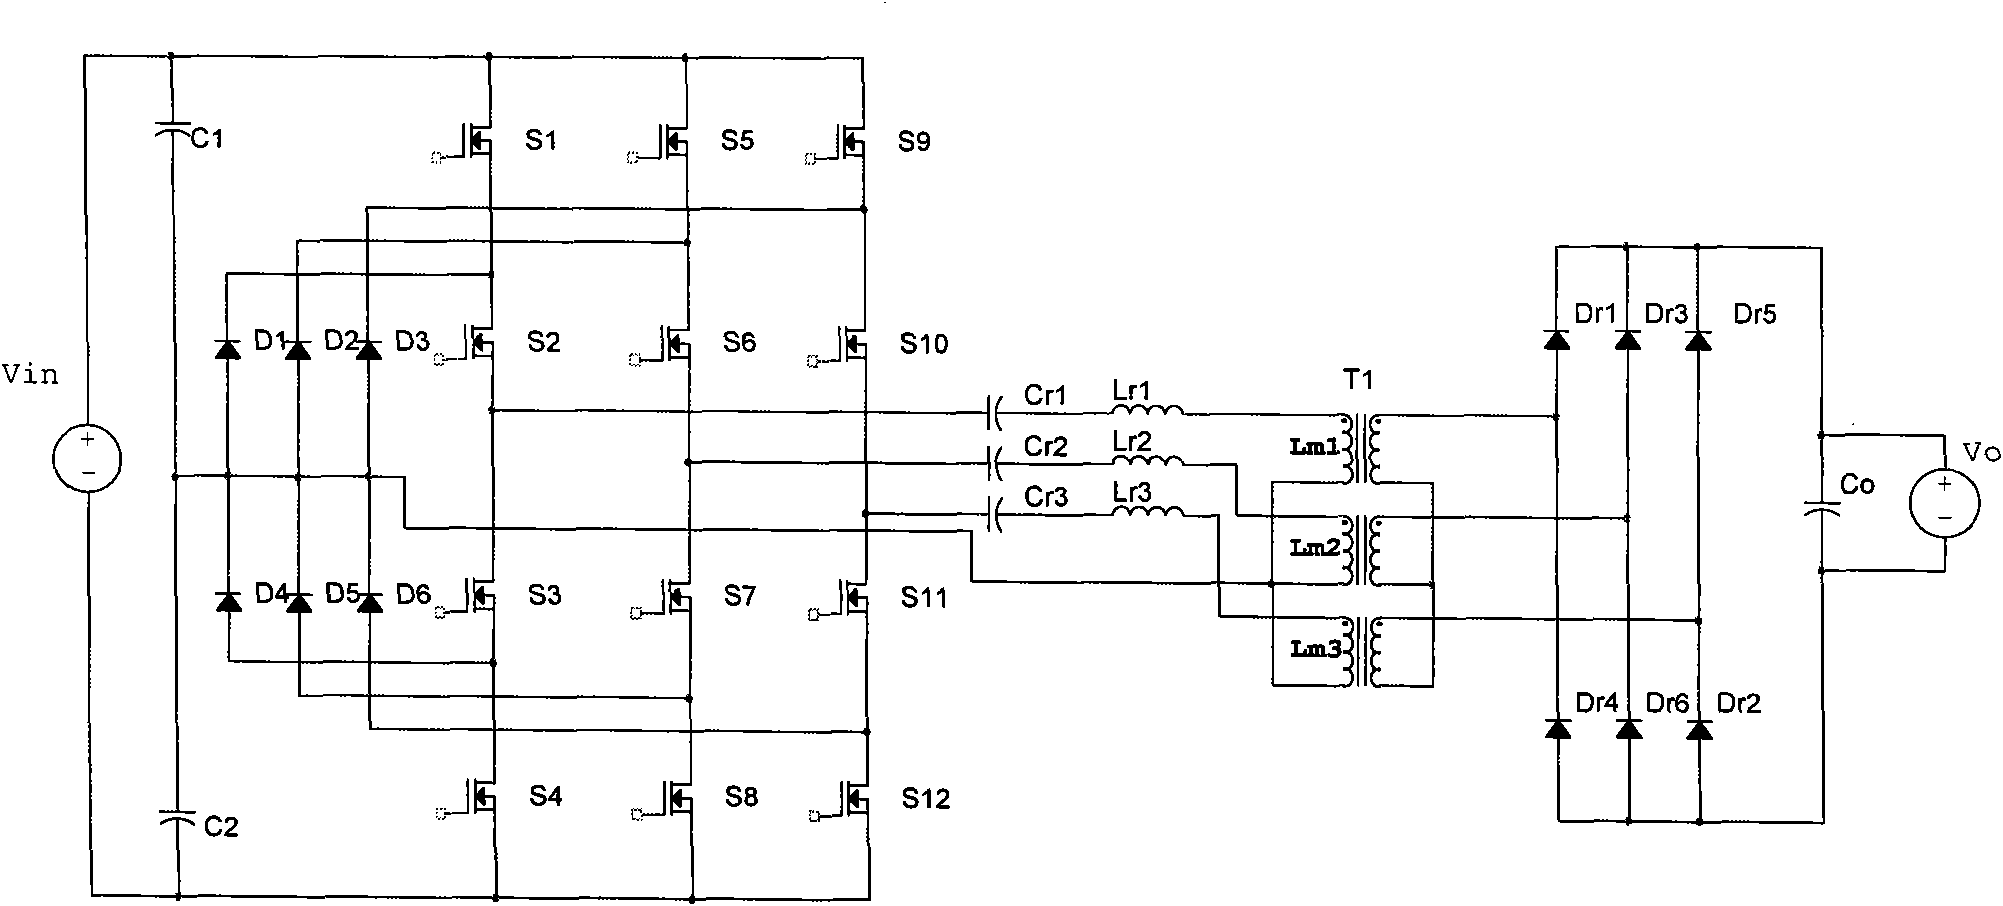 Three-phase tri-level LLC resonant converter